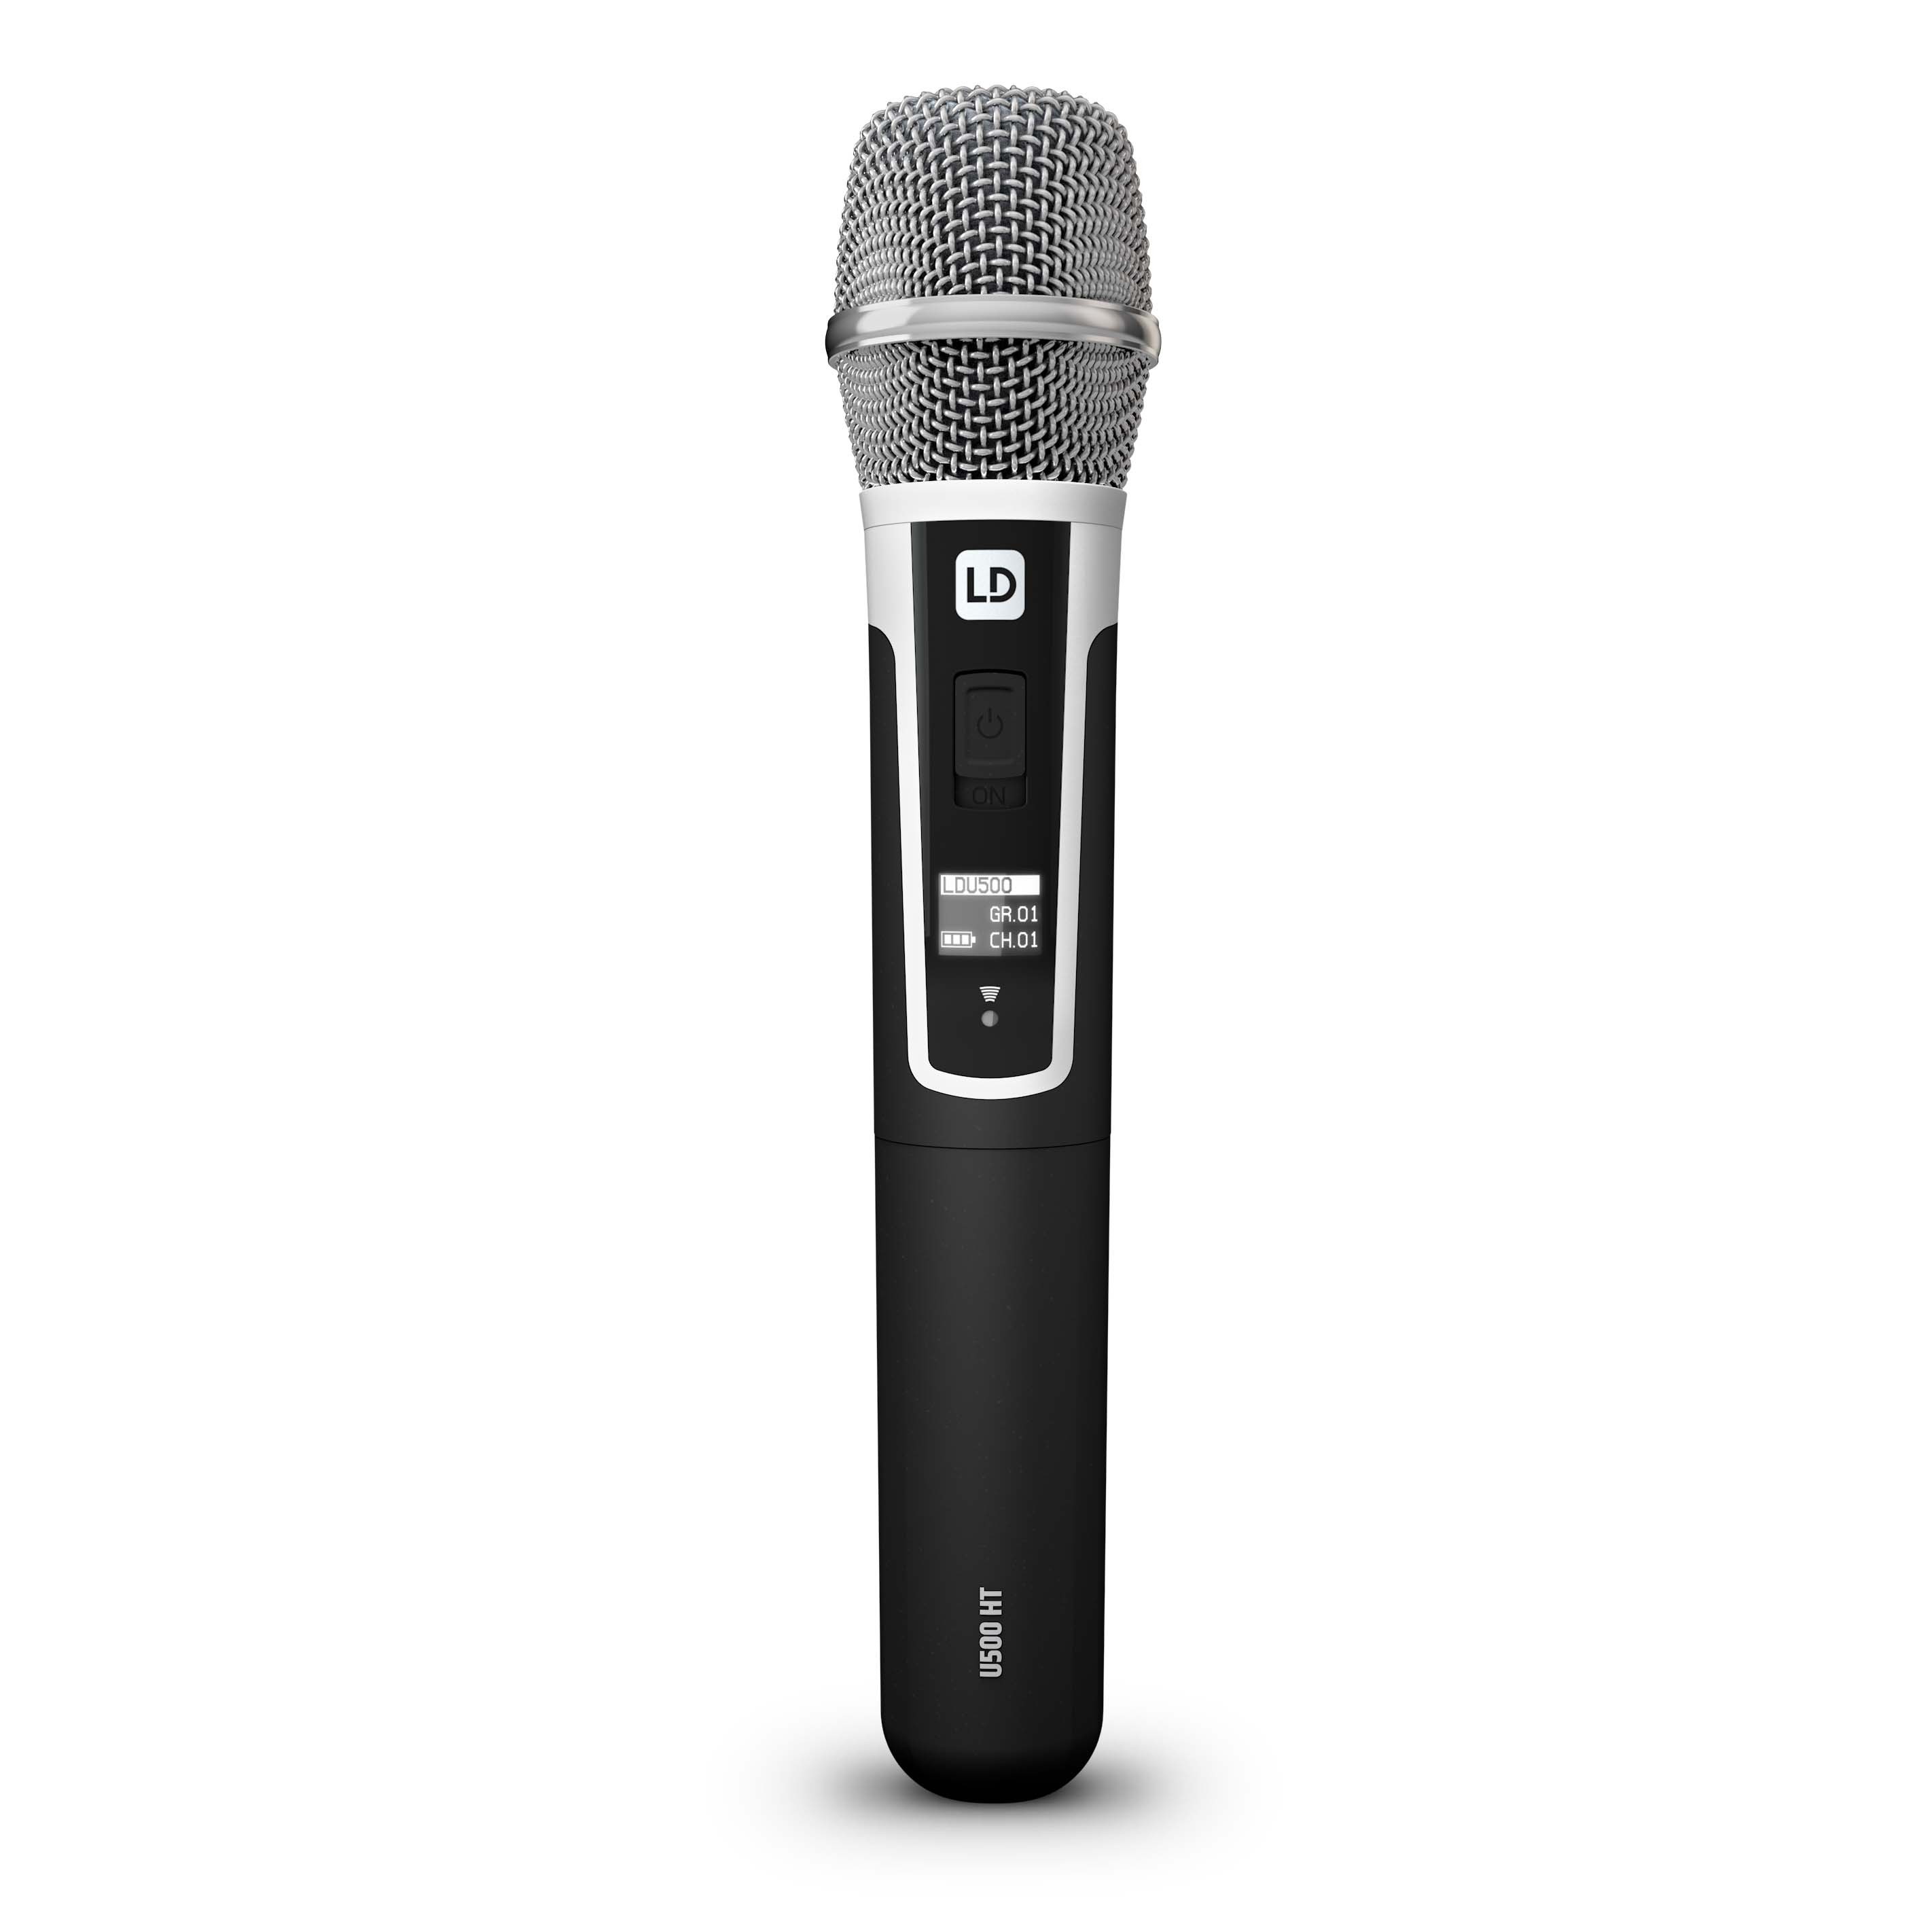 Ld Systems U505 Hhc 2 - Wireless handheld microphone - Variation 4